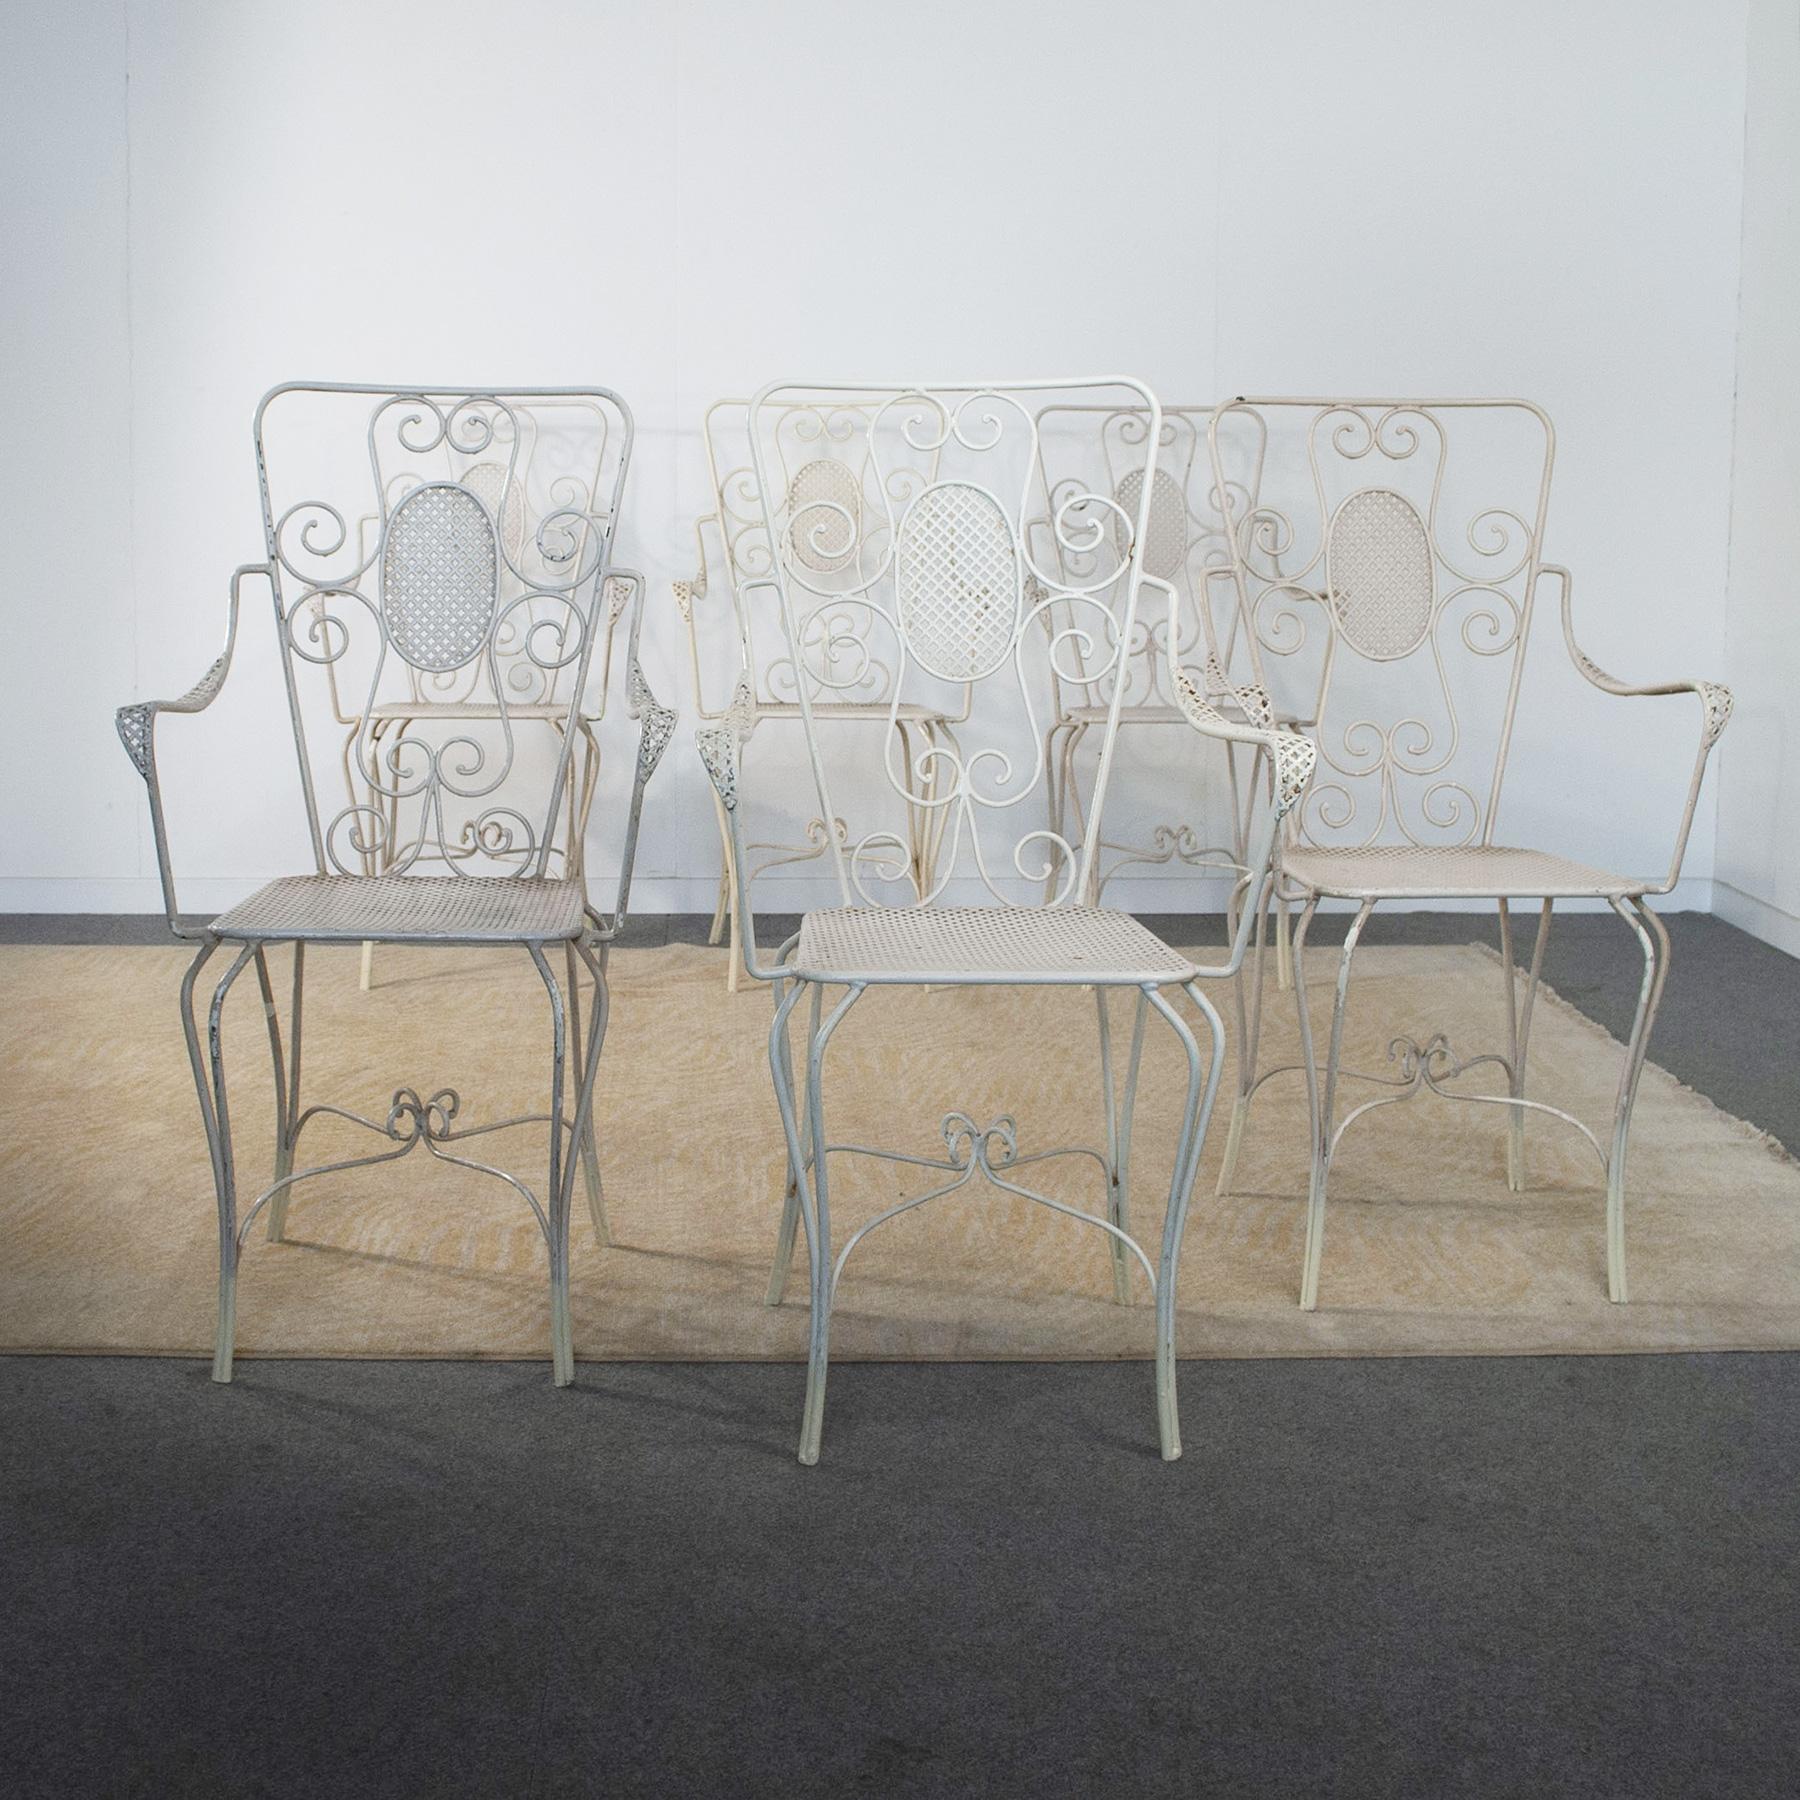 Mid-20th Century Casa E Giardino, Six White Painted Metal Chairs, 1942 For Sale